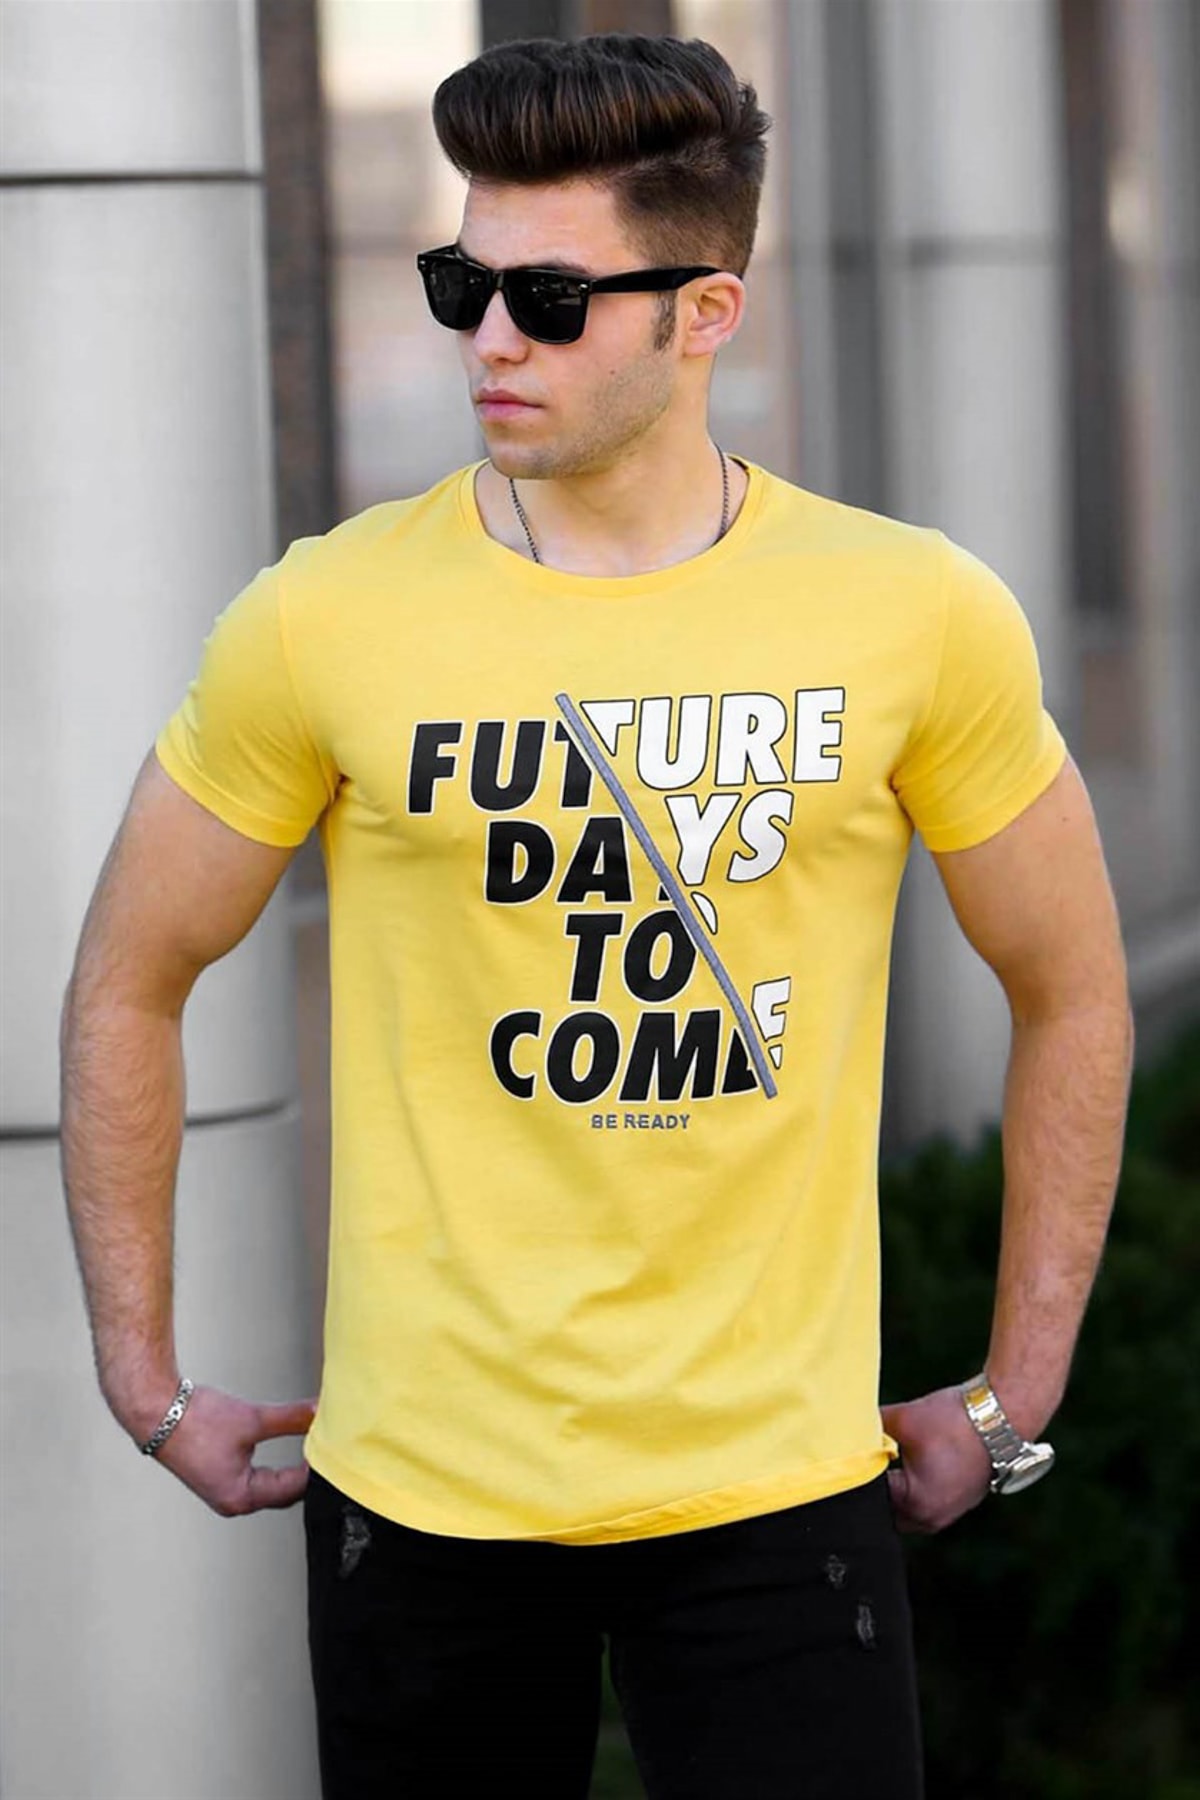 Madmext Men's Printed Yellow T-Shirt 4475